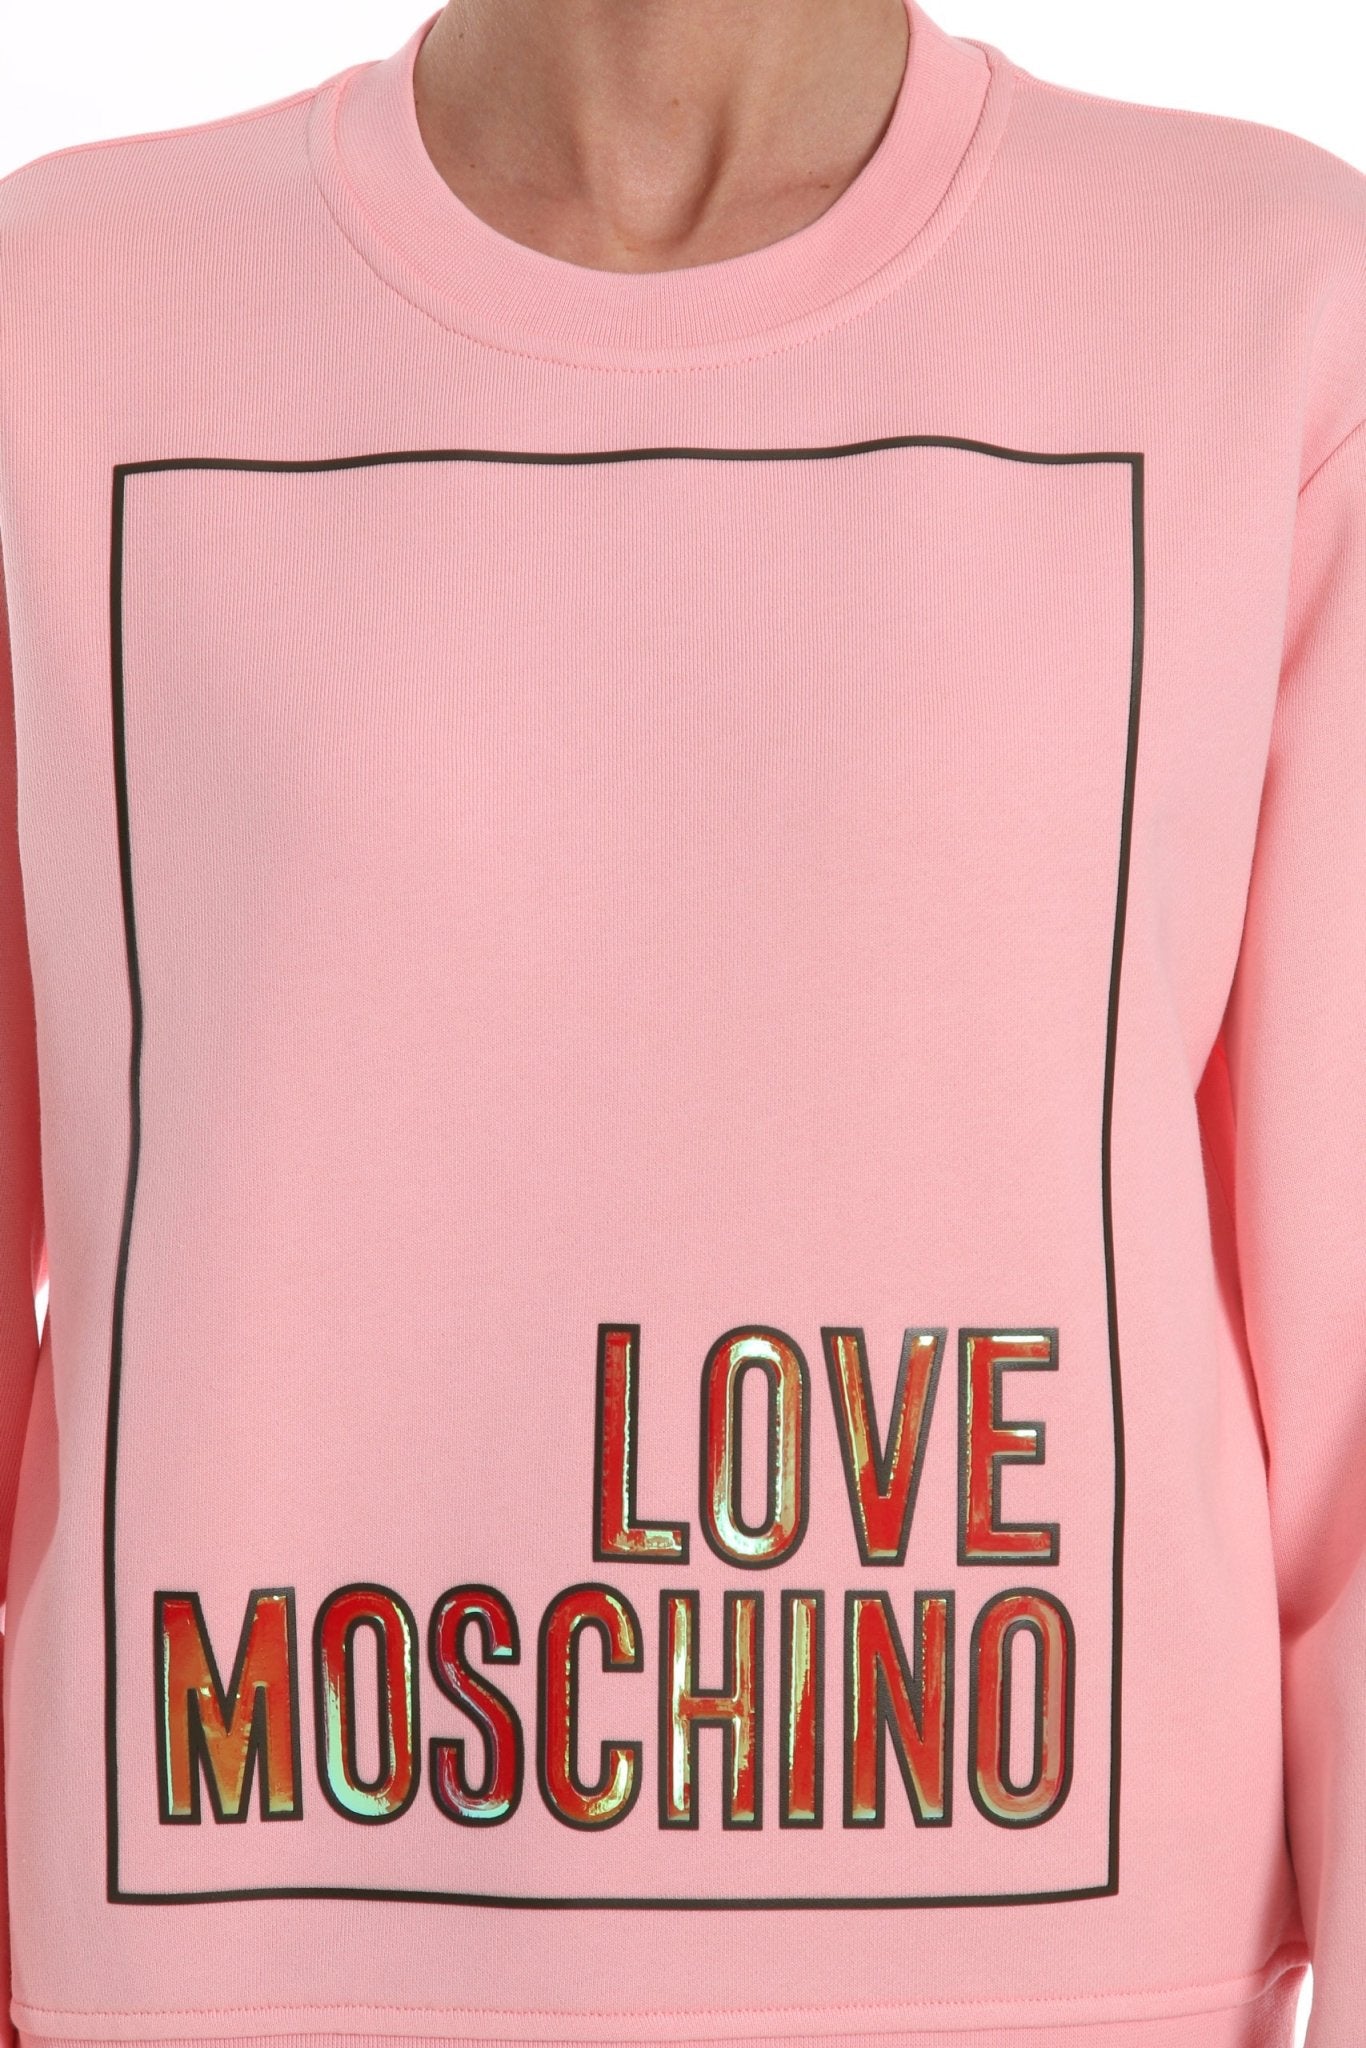 Love Moschino Pink Cotton Sweater - Fizigo